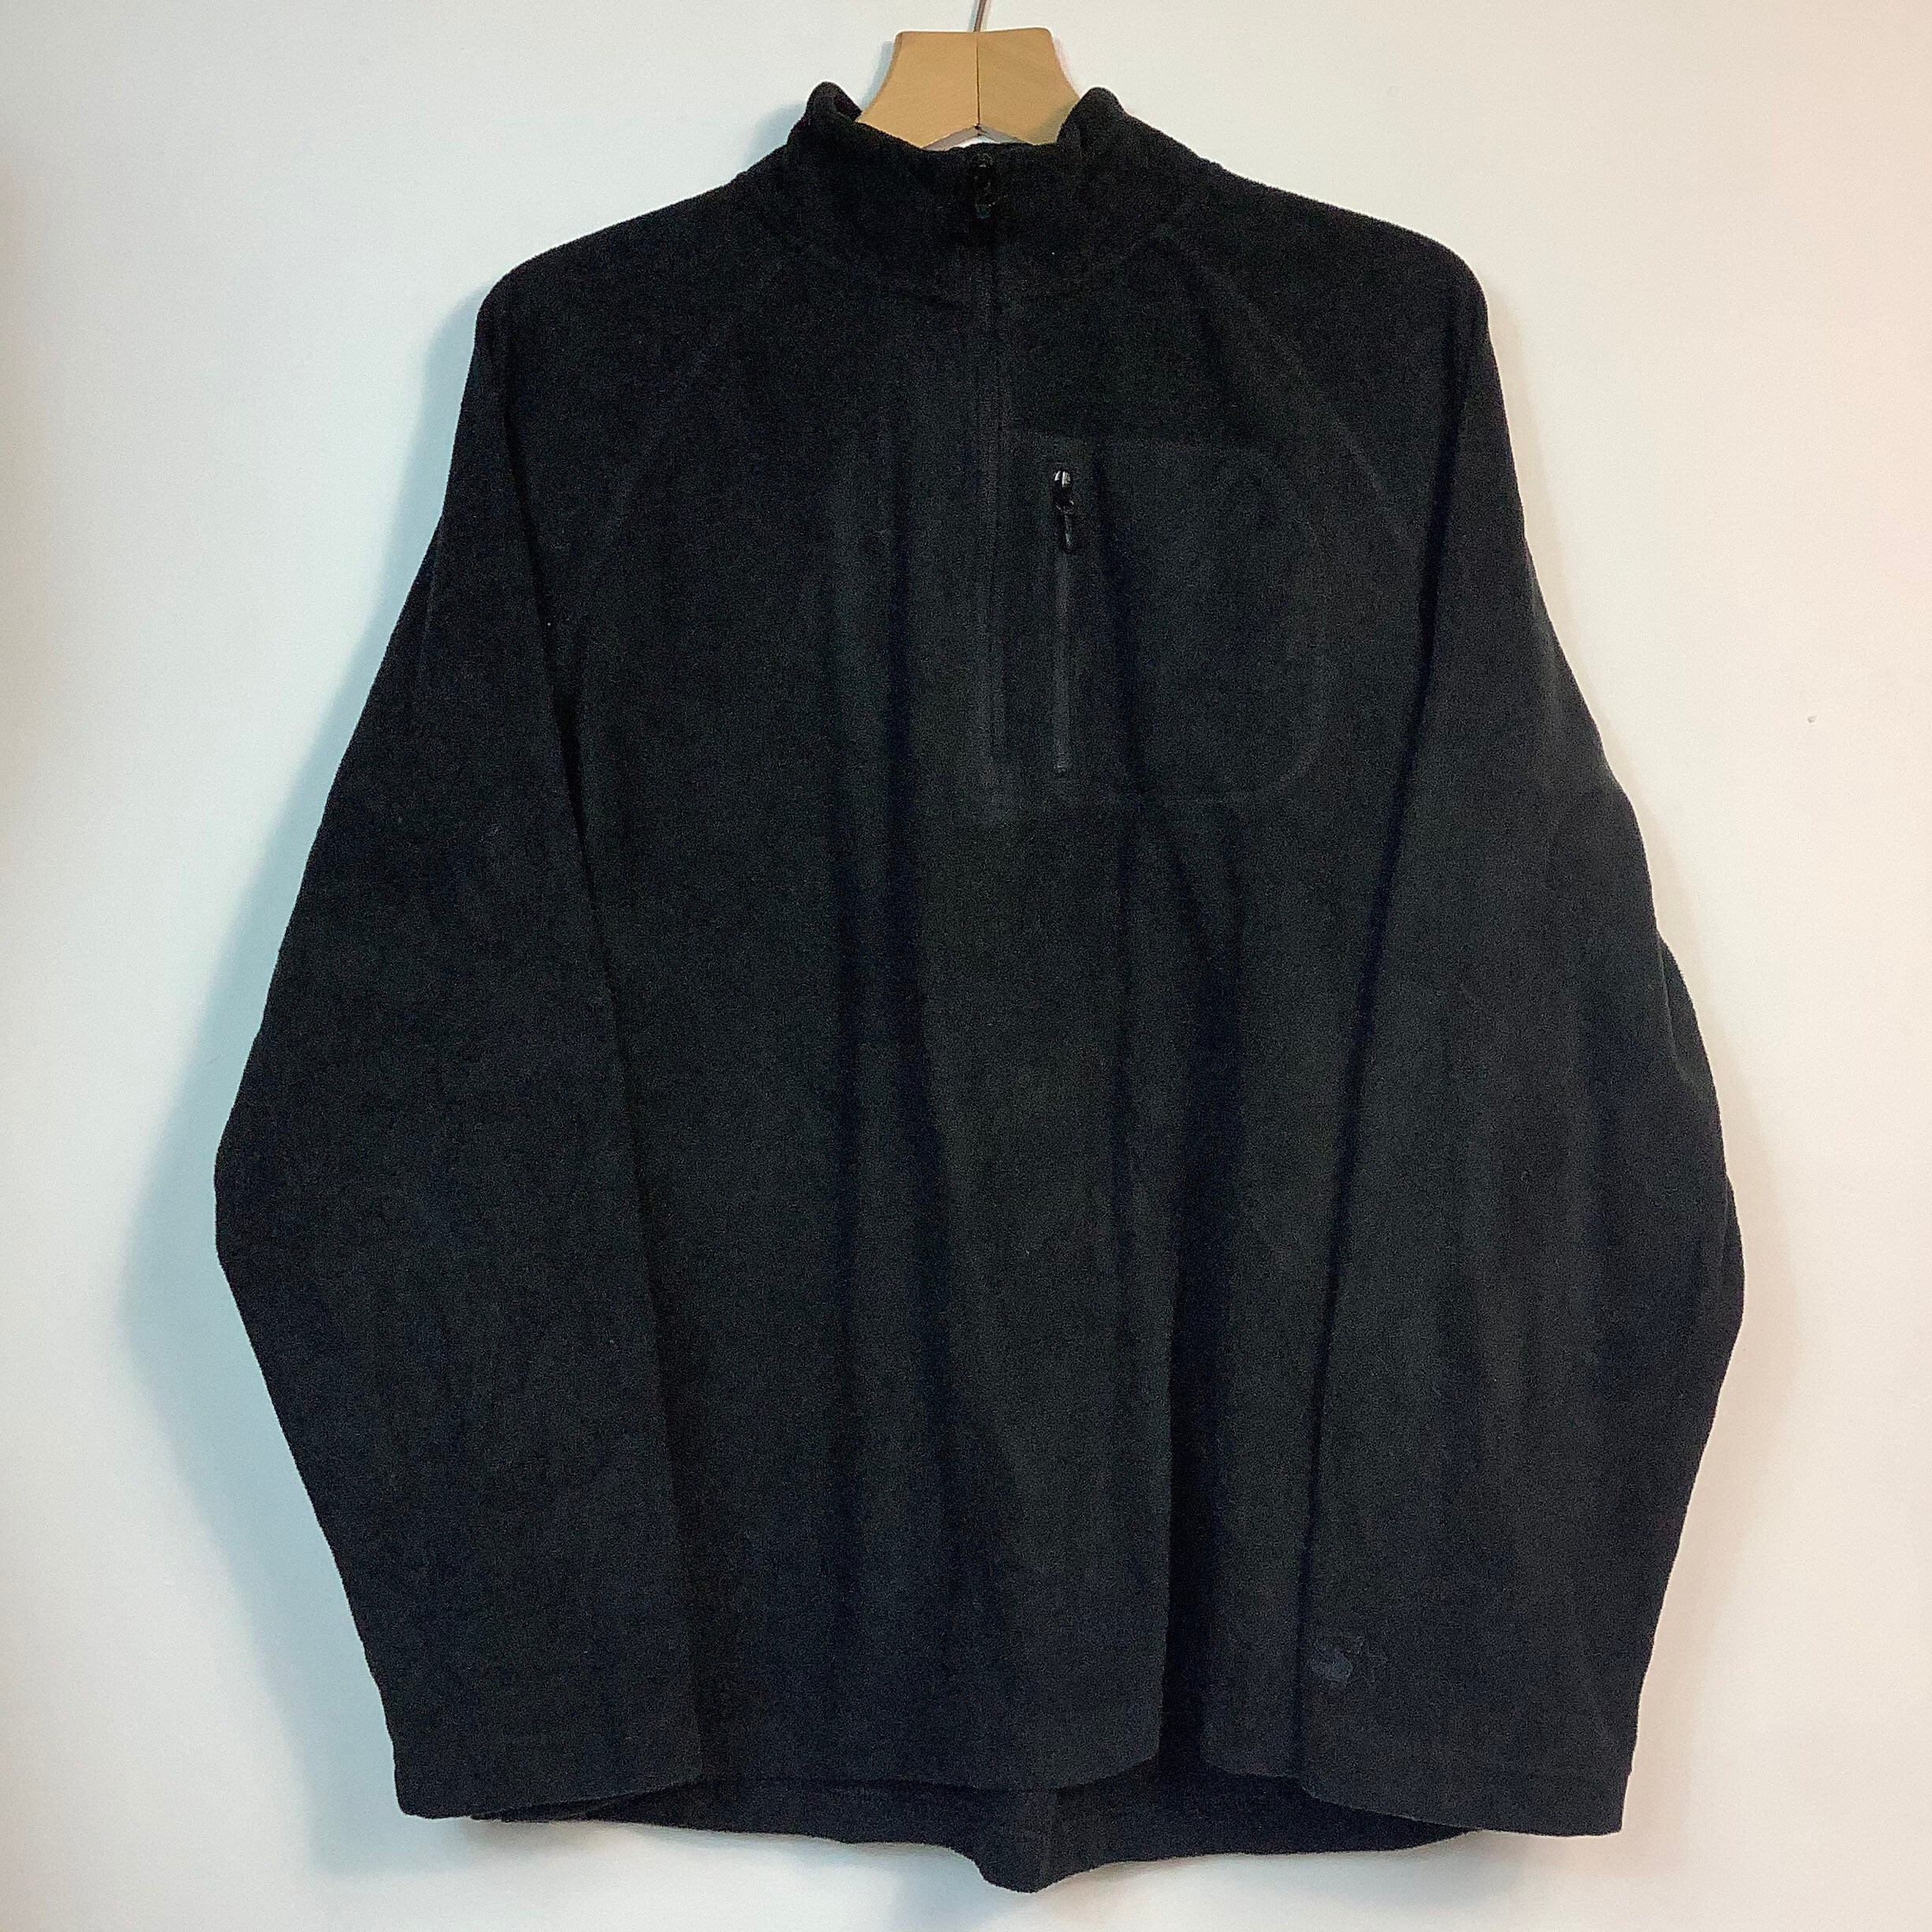 Vintage Starter quarter zip fleece jumper | Etsy